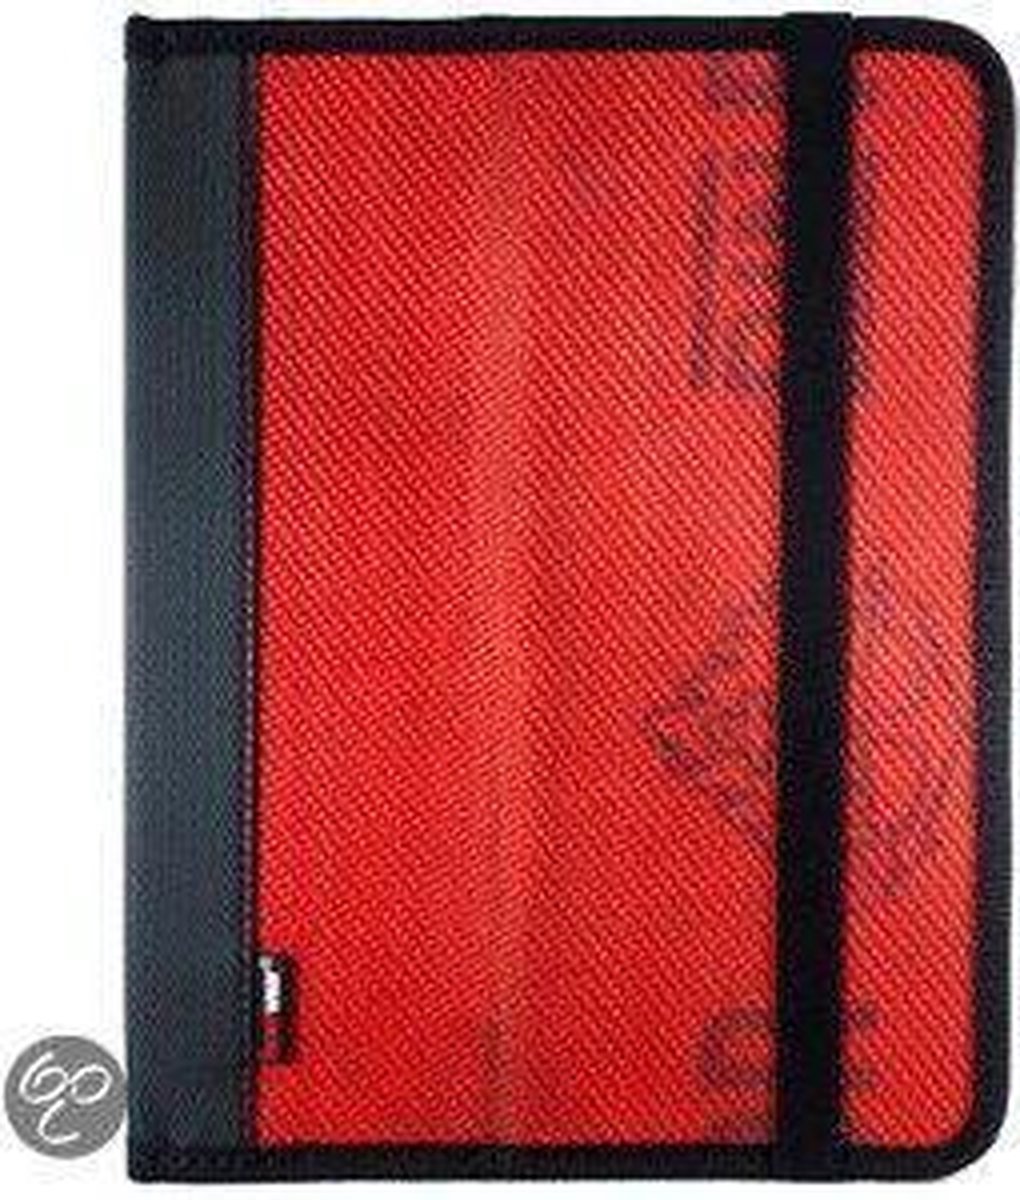 Feuerwear iPad case Rick - kleur rood